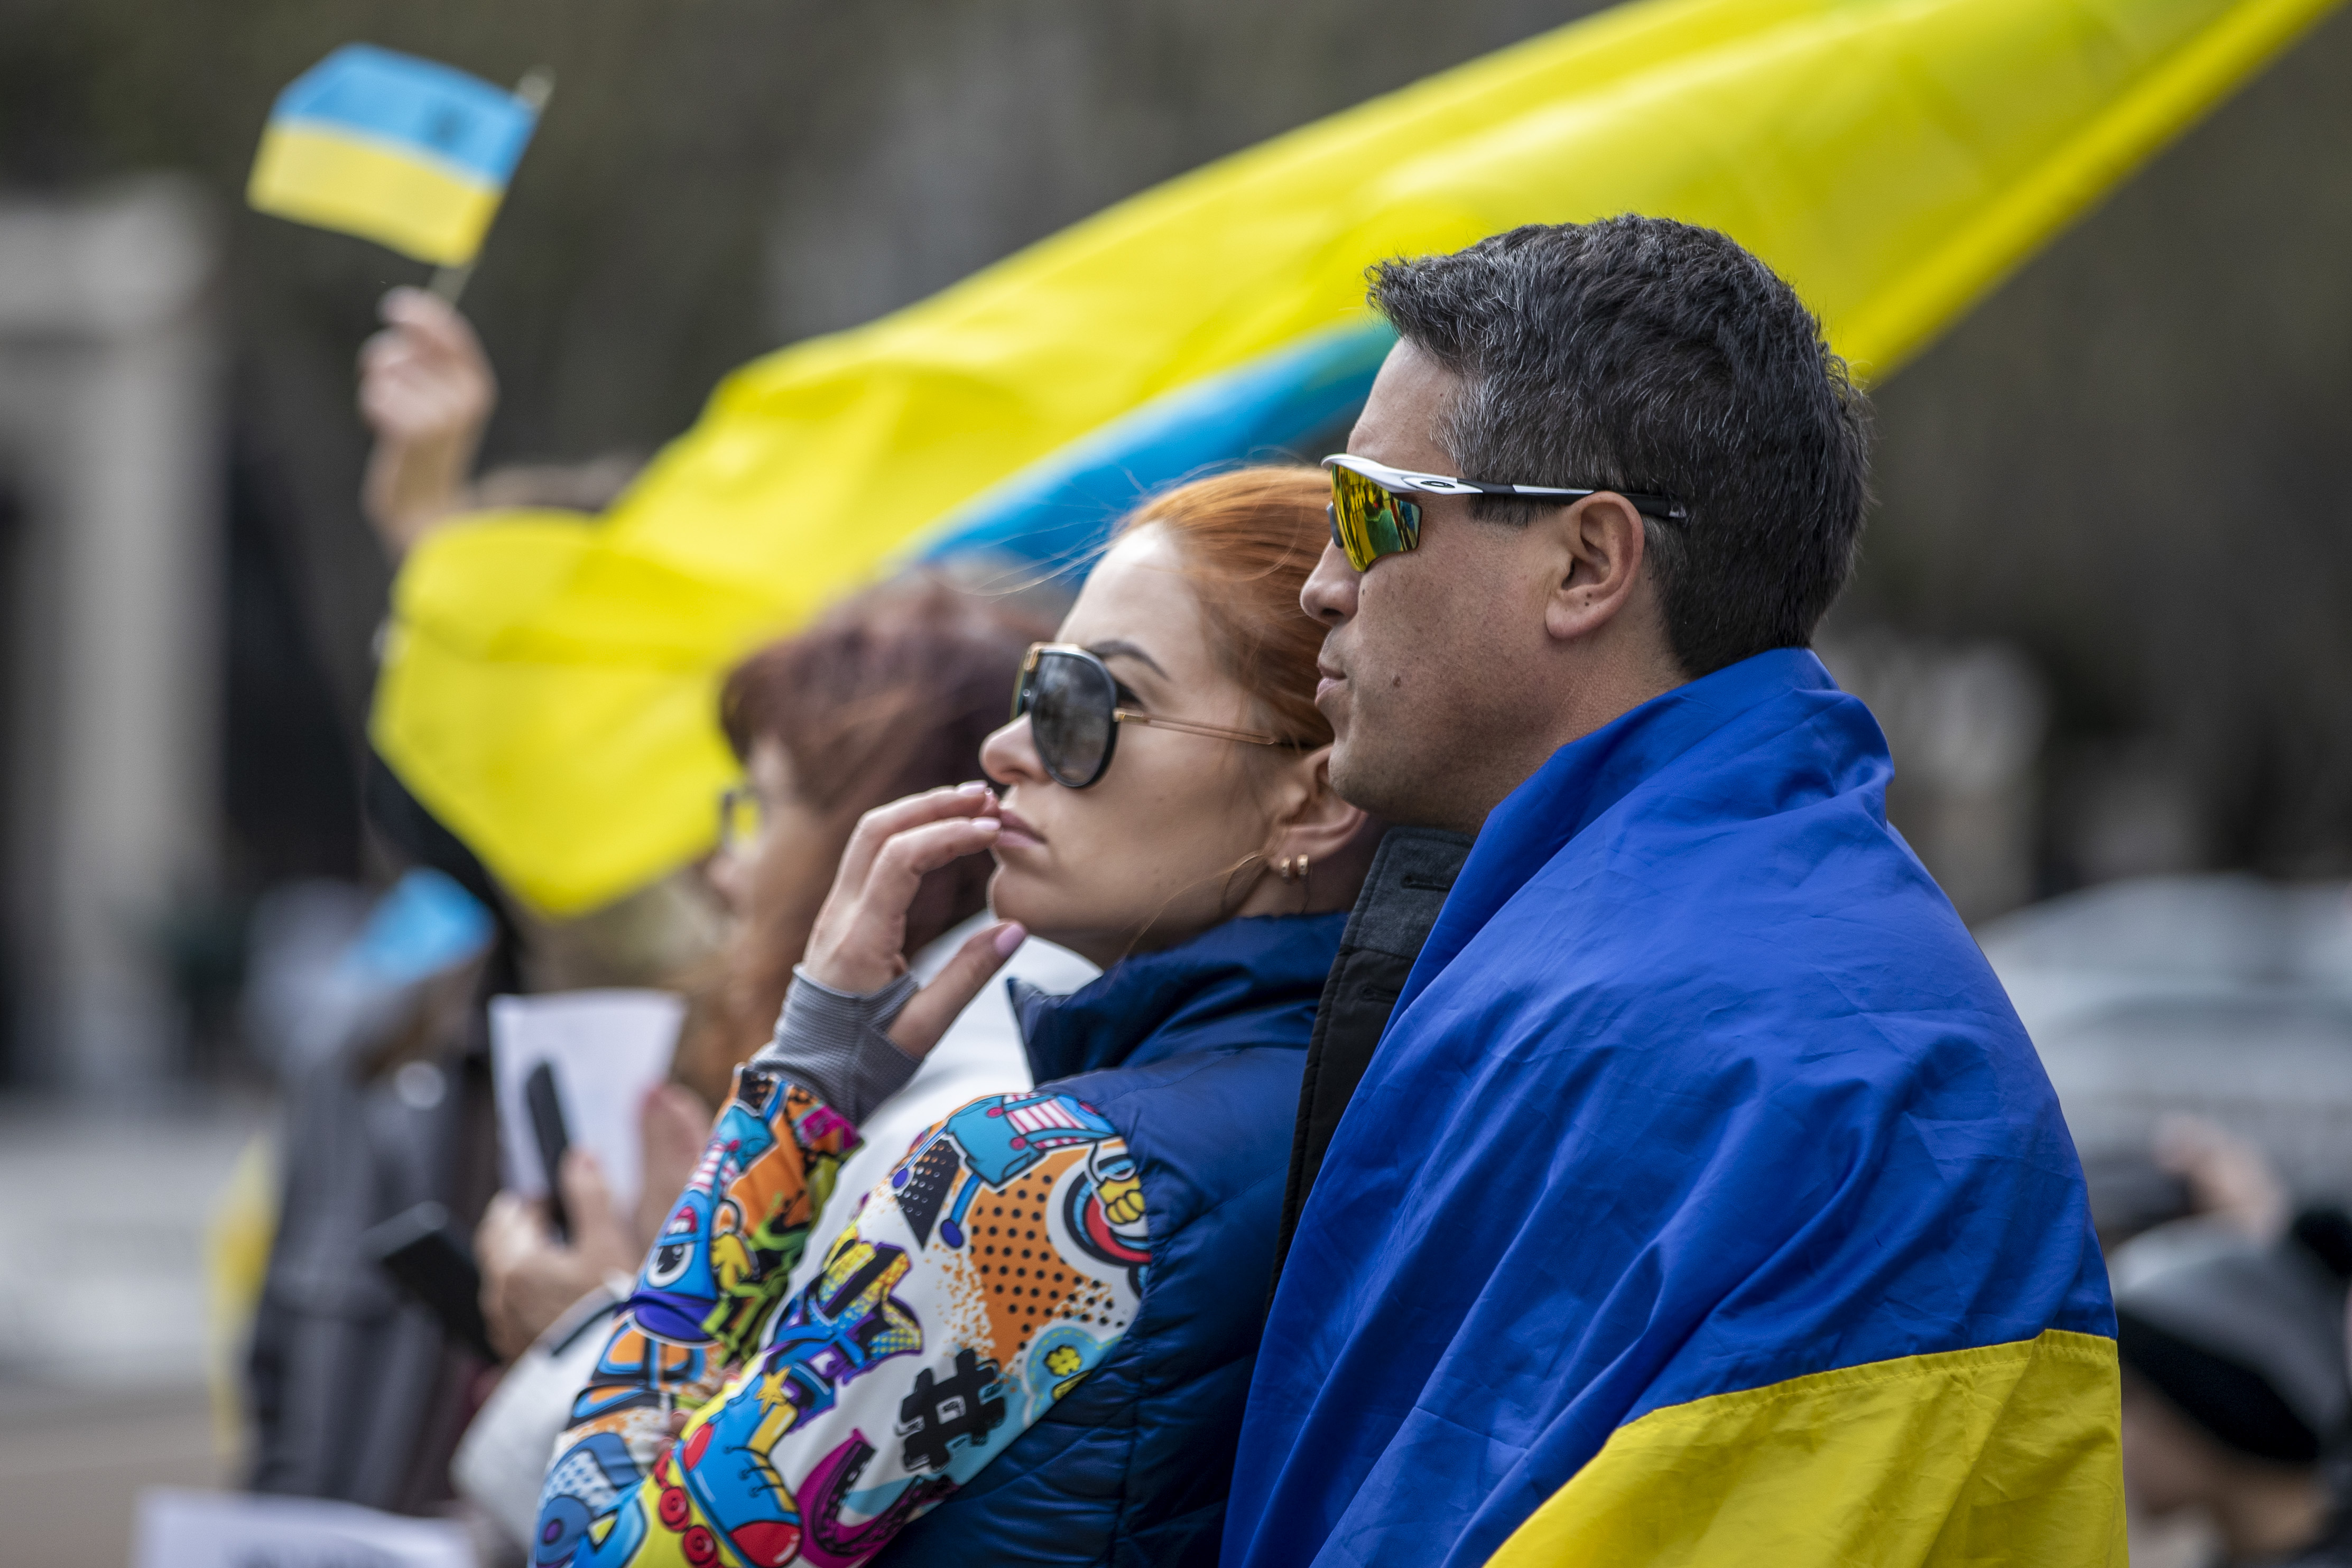 Rally In Support Of Ukrainians Held In Washington, DC